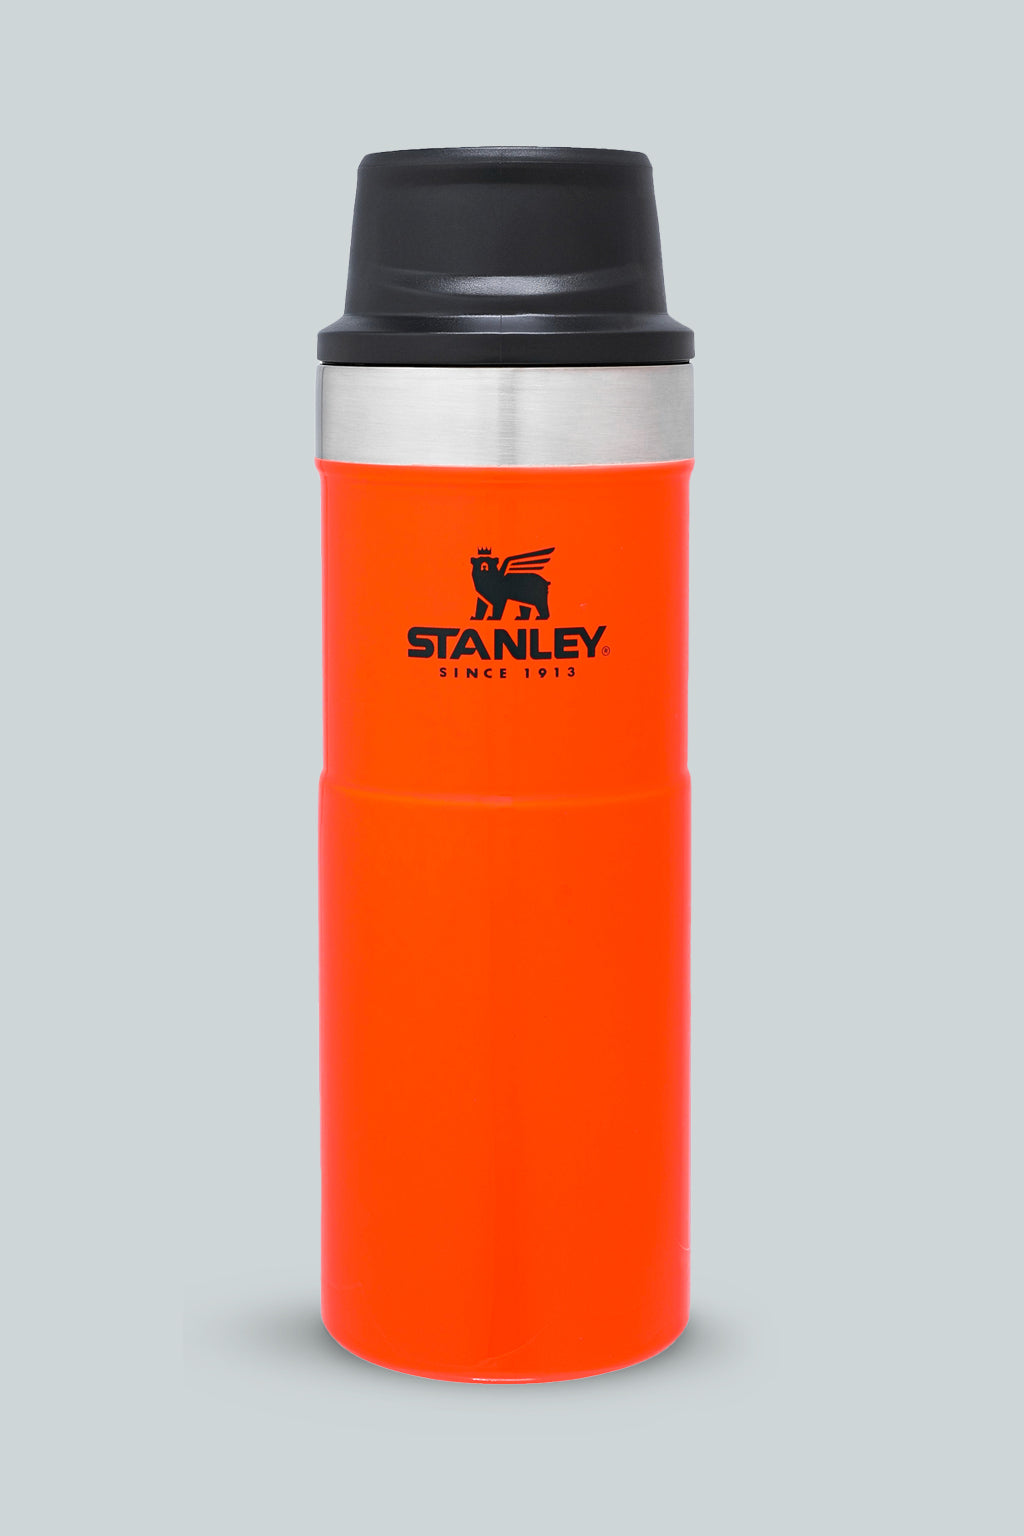 16oz Stanley Classic Trigger Action Travel Mug Bottle NEW 0.47L STANLEY NEW